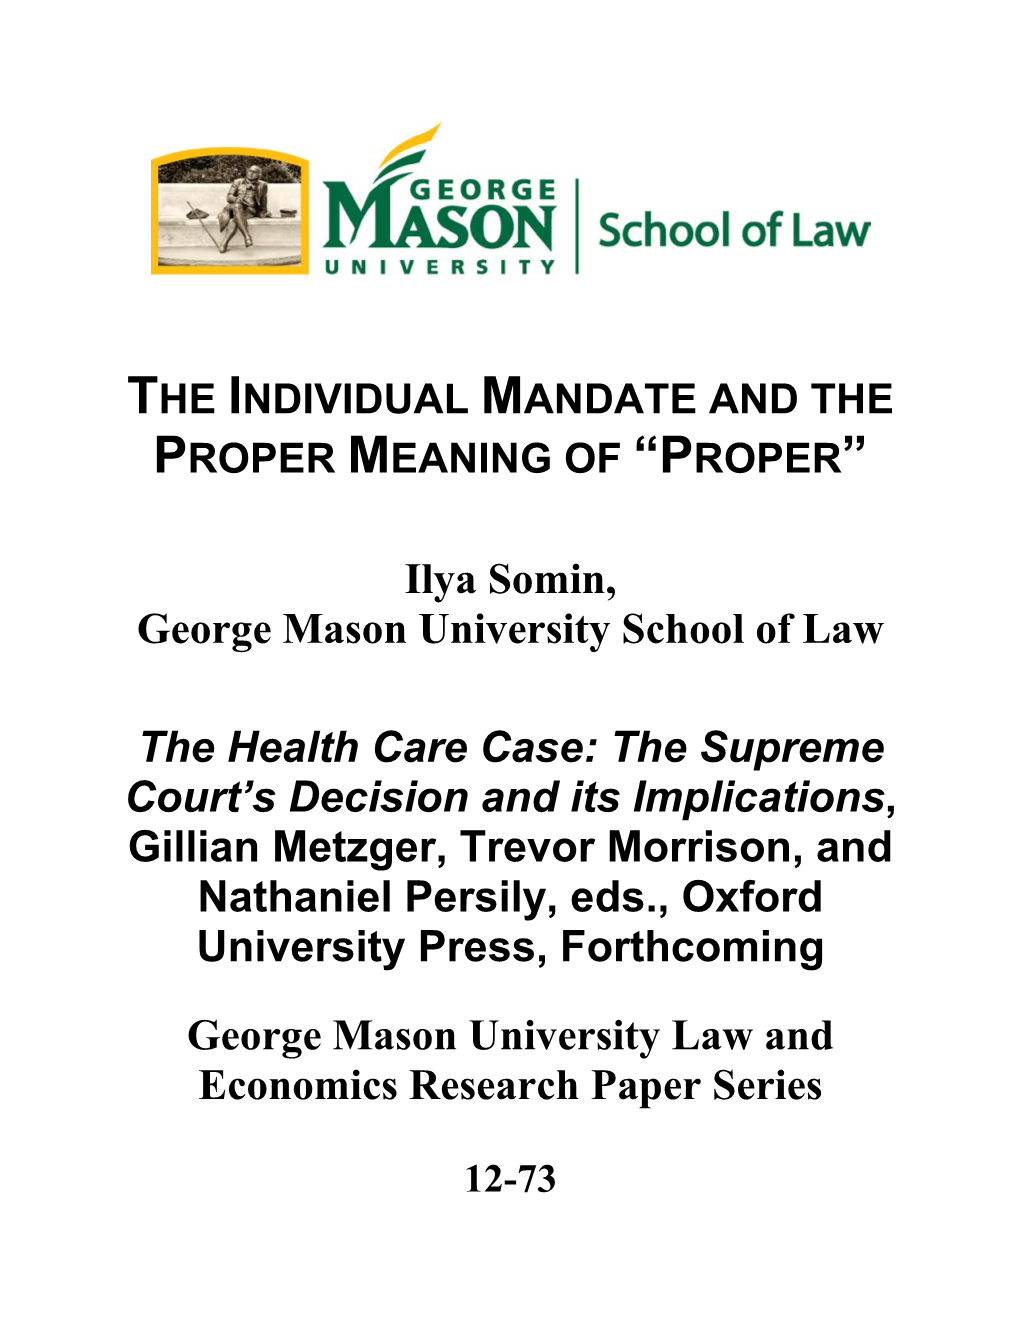 Ilya Somin, George Mason University School of Law